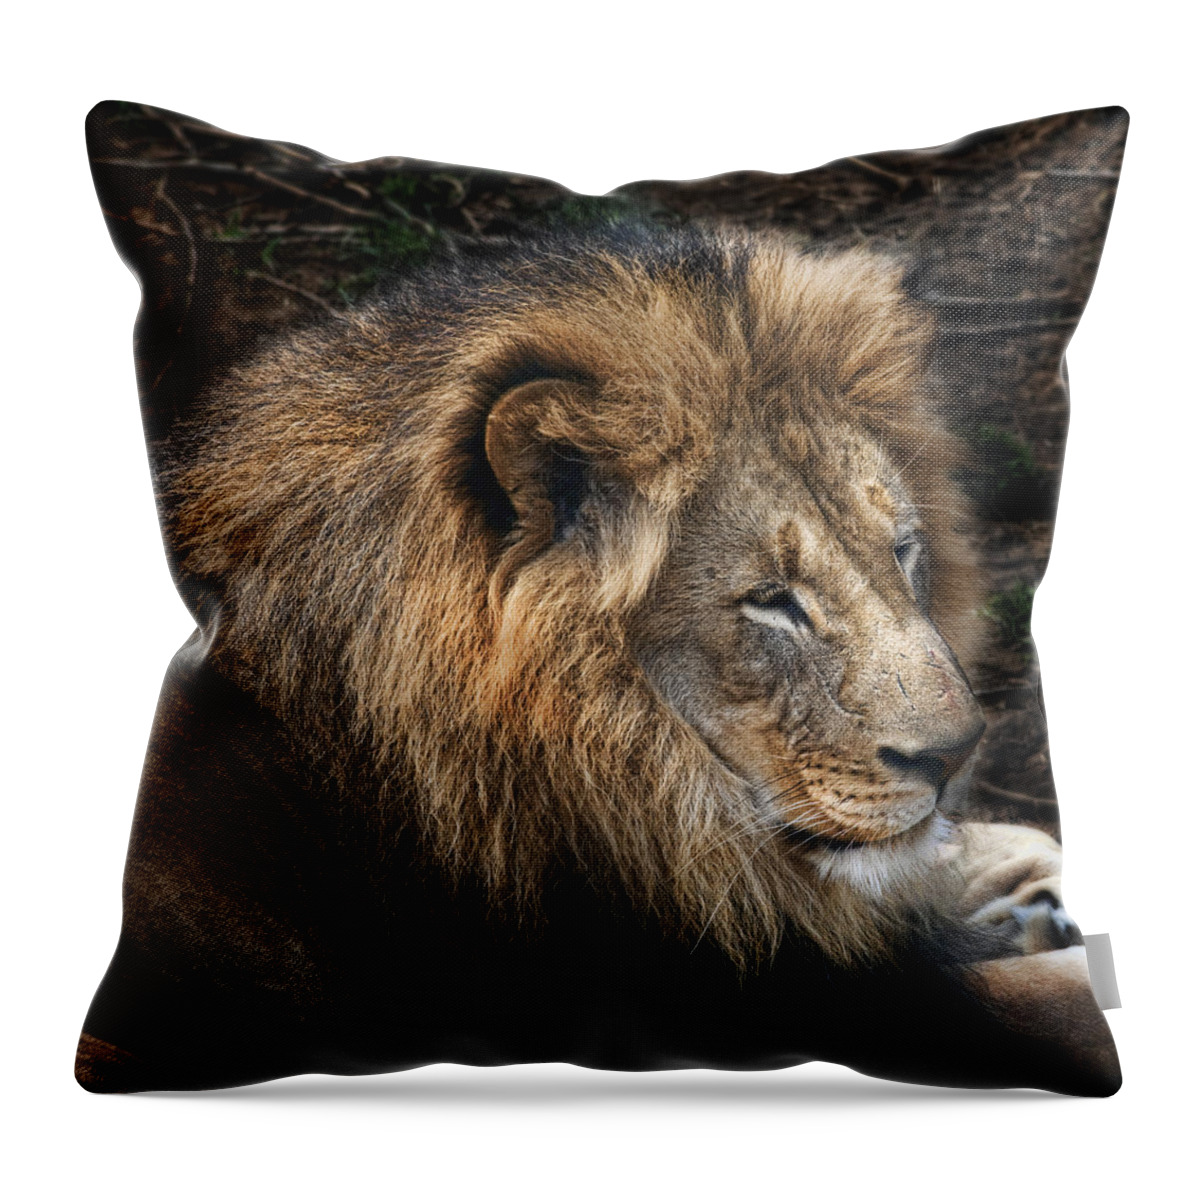 Lion Throw Pillow featuring the photograph African Lion #1 by Tom Mc Nemar